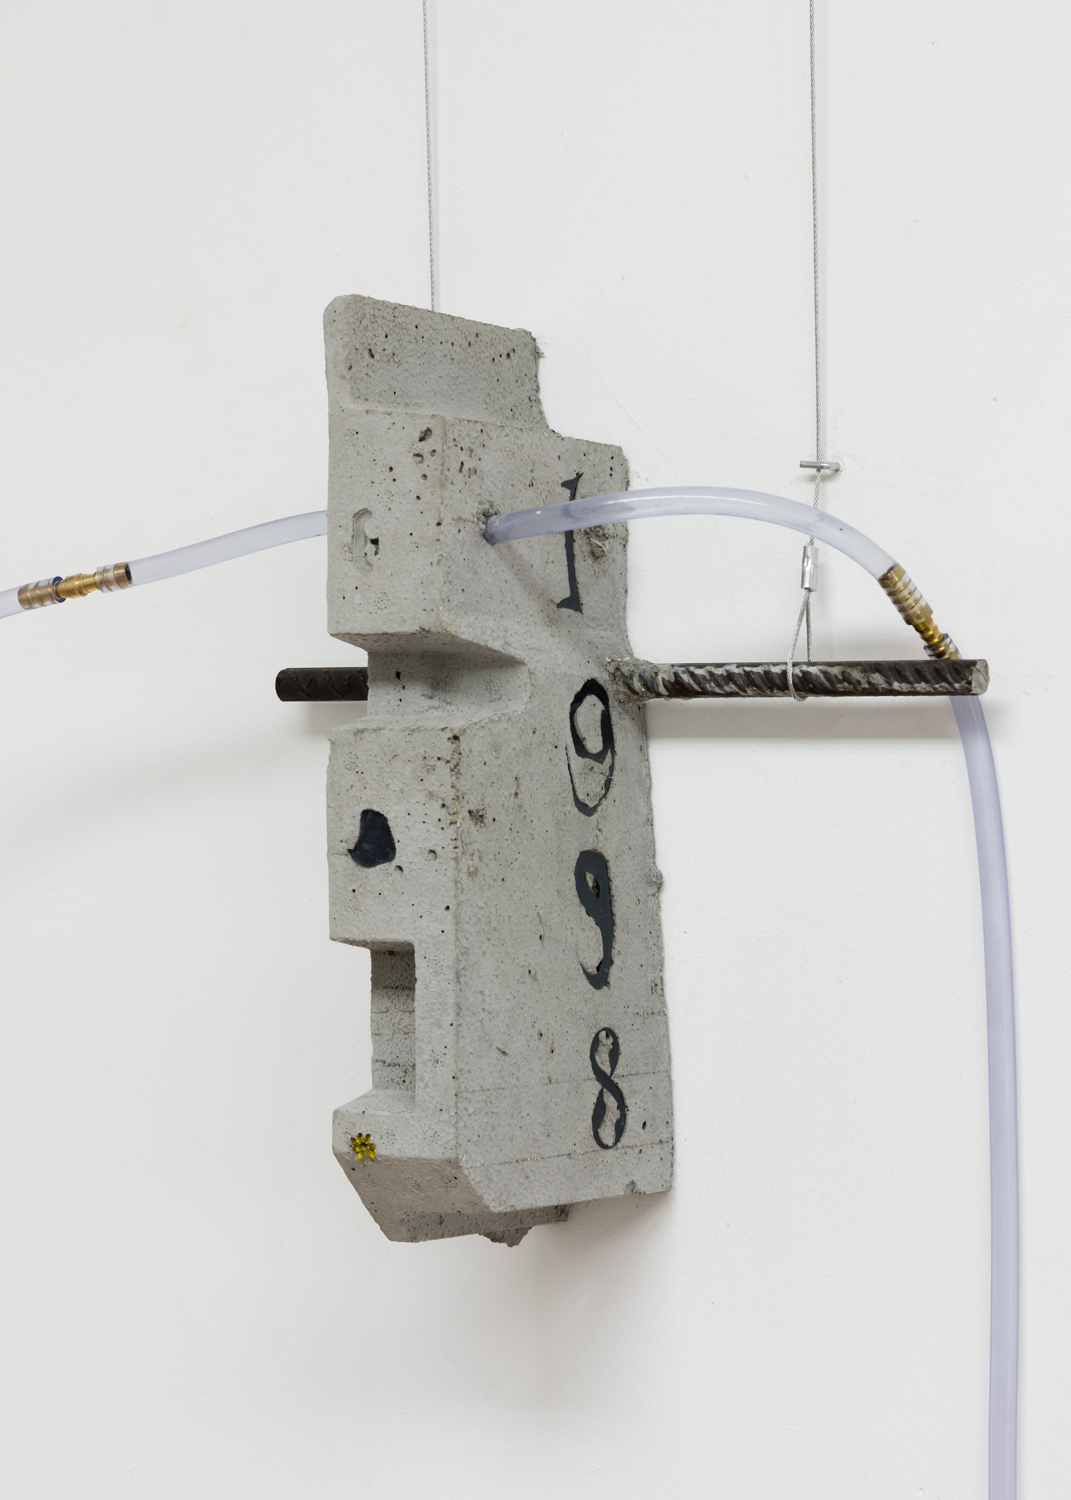  Phoebe Berglund in collaboration with Arkadiy Ryabin,  1998,  2019. Concrete, rebar, plexiglass, vinyl tubing. 14 x 12 x 5.5 inches. 